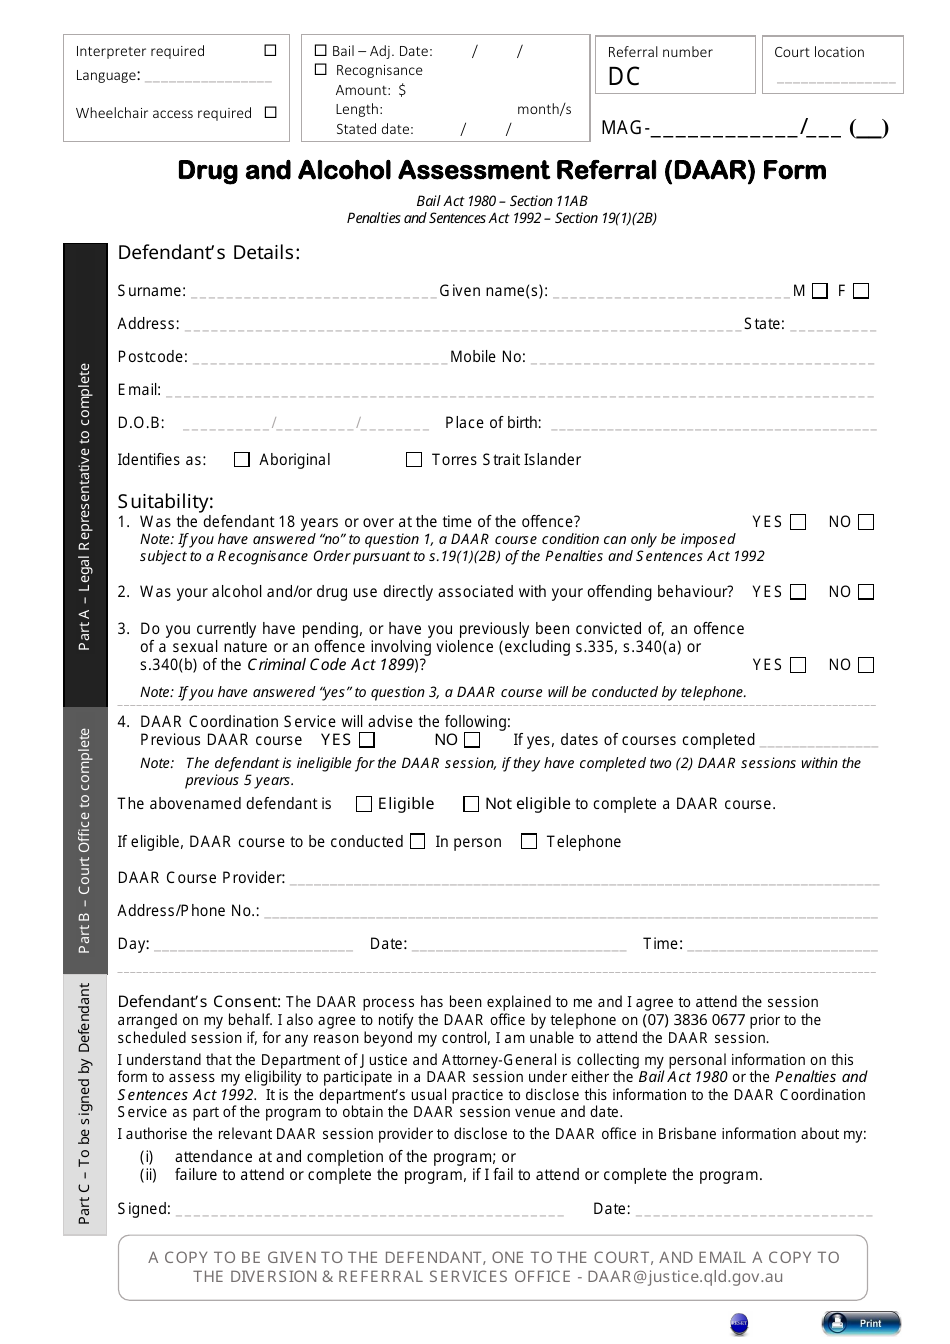 Drug and Alcohol Assessment Referral (Daar) Form - Queensland, Australia, Page 1